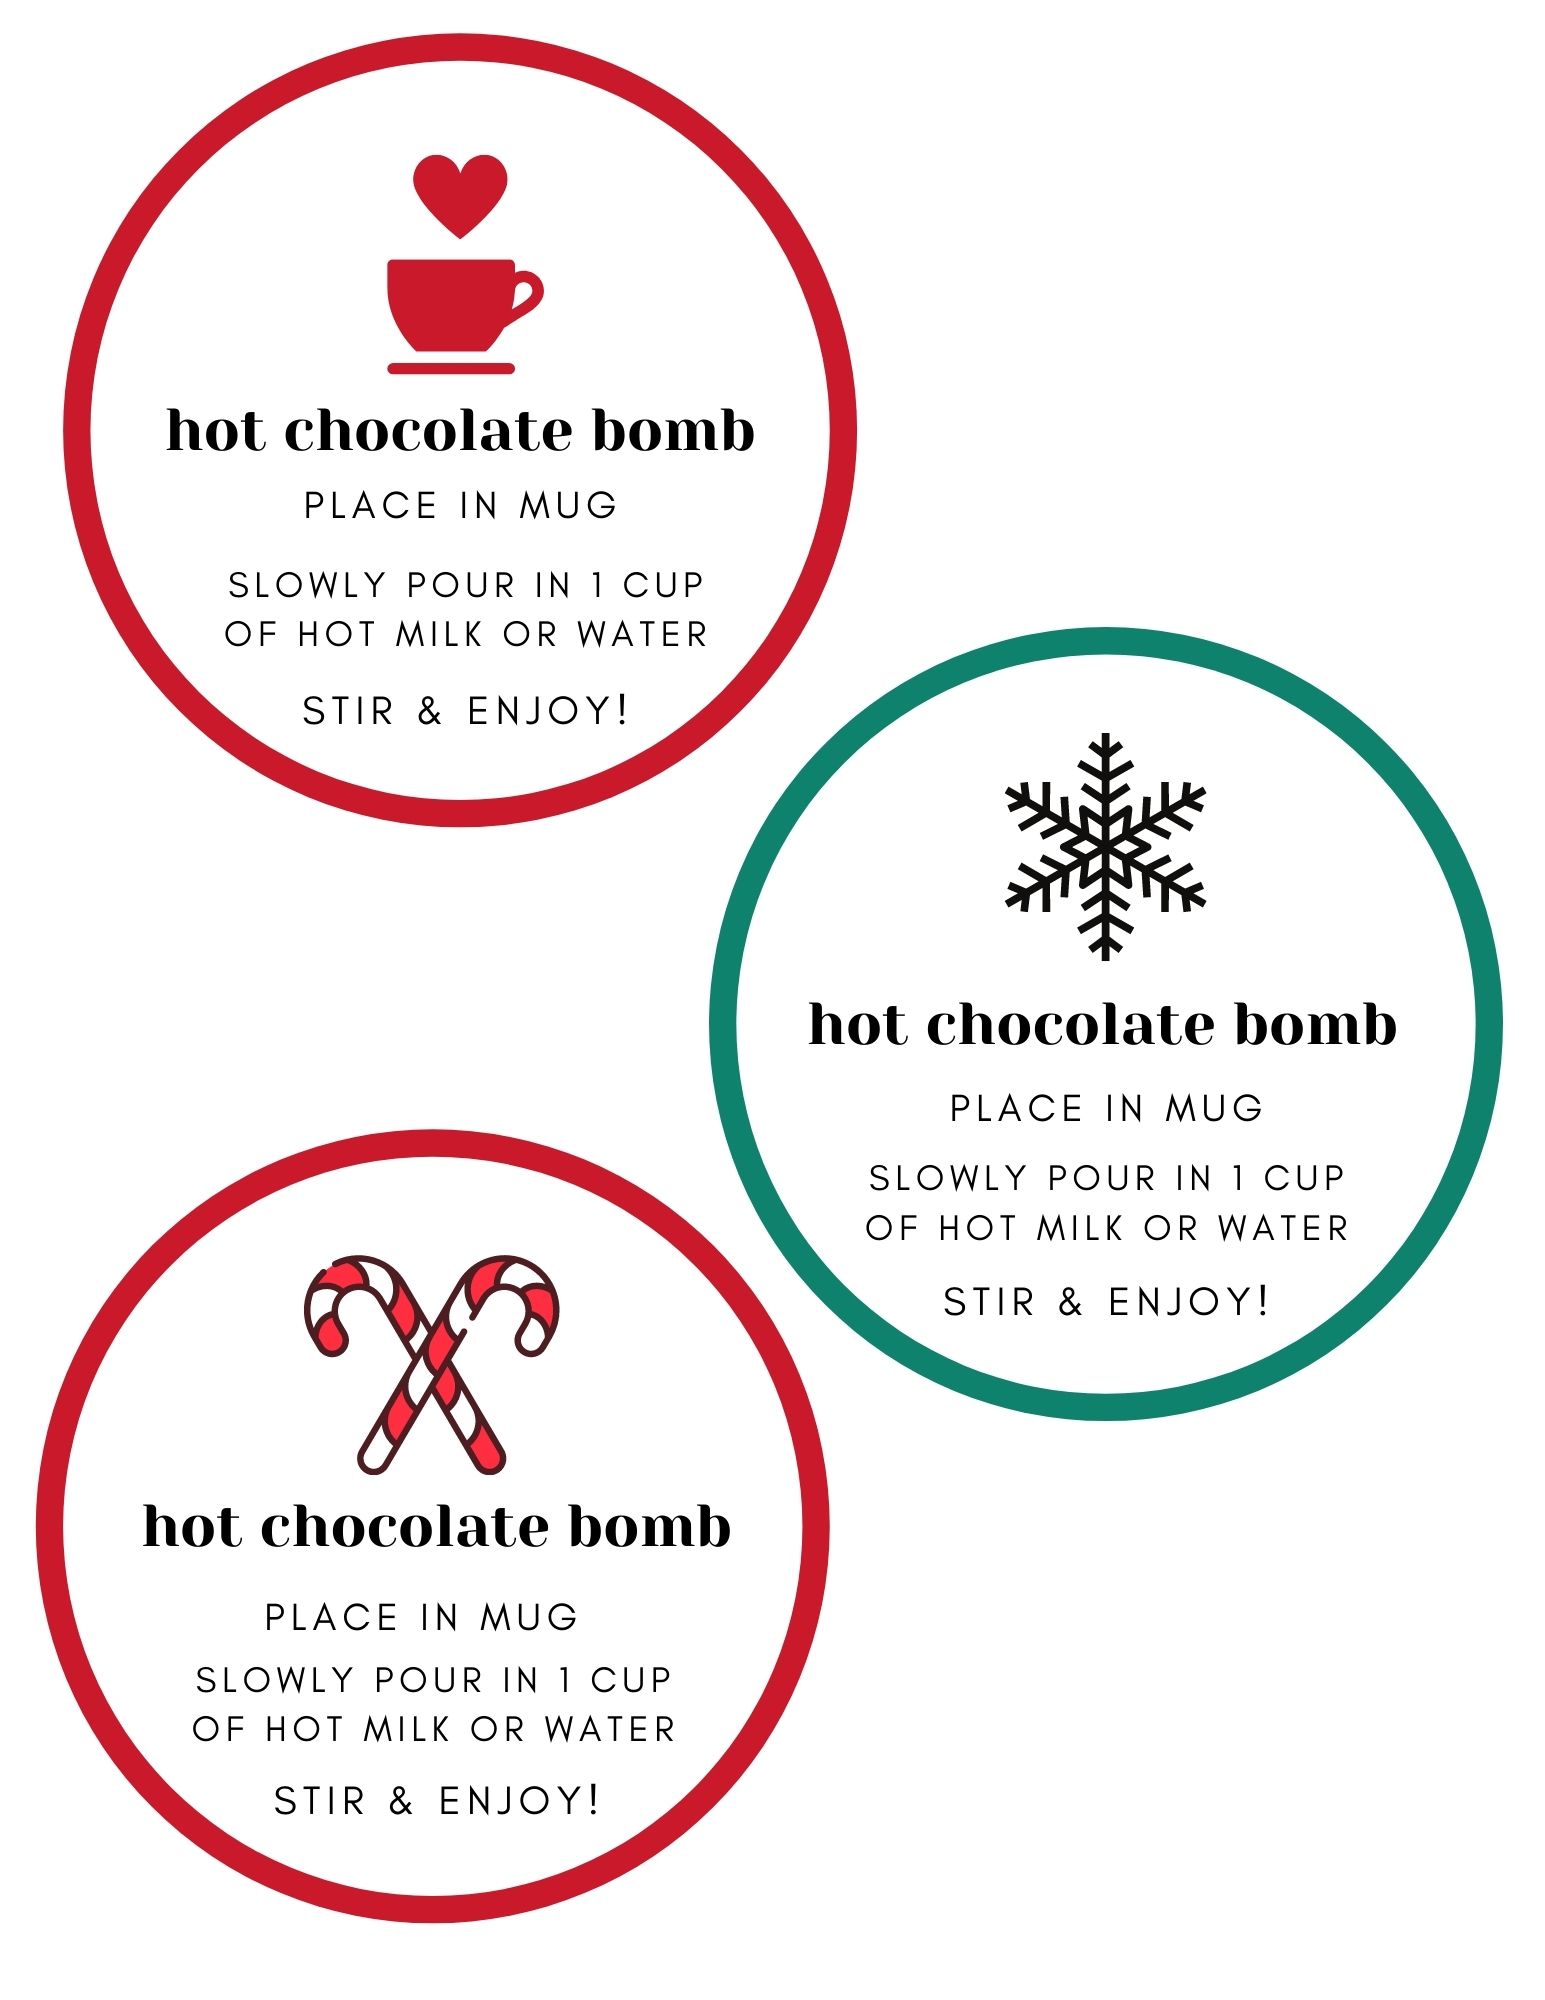 Chocolate Bomb Instructions Printable